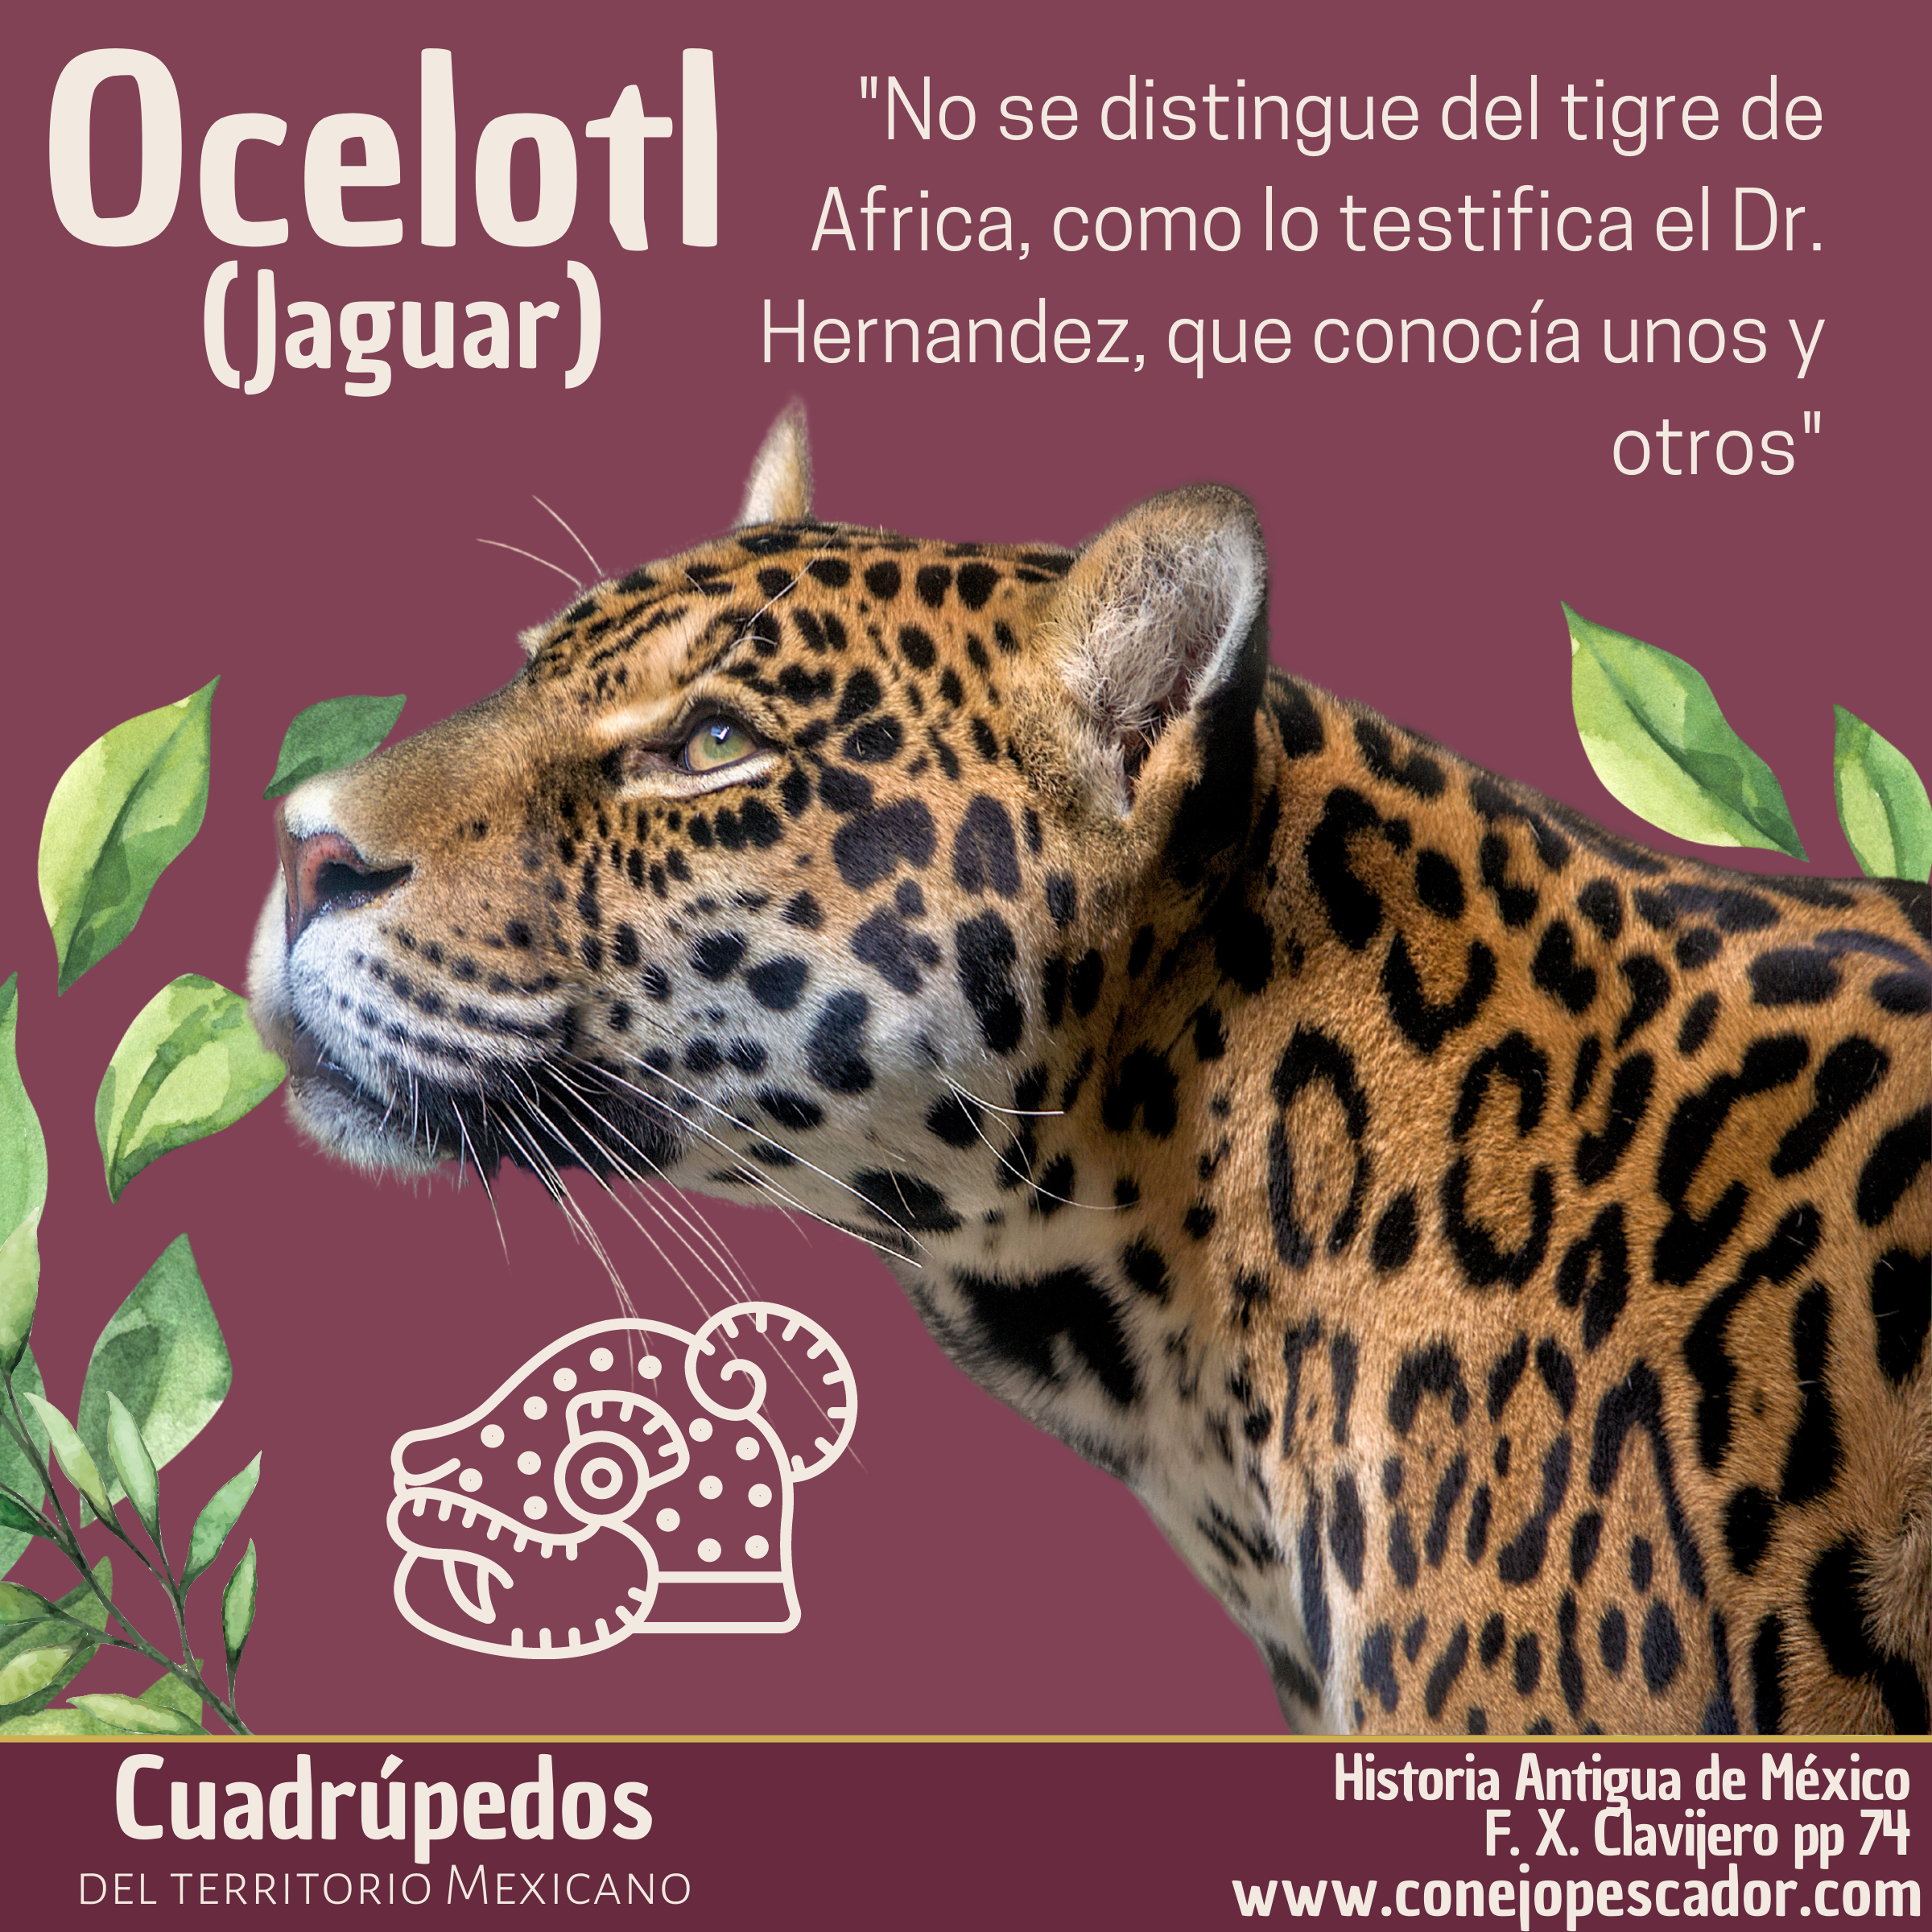 Imagen de un Ocelotl o Jaguar, acompañado de una cita del libro 'Historia antigua de México' de Francisco Xavier Clavijero. Texto de la cita: 'No se distingue del tigre de Africa'.